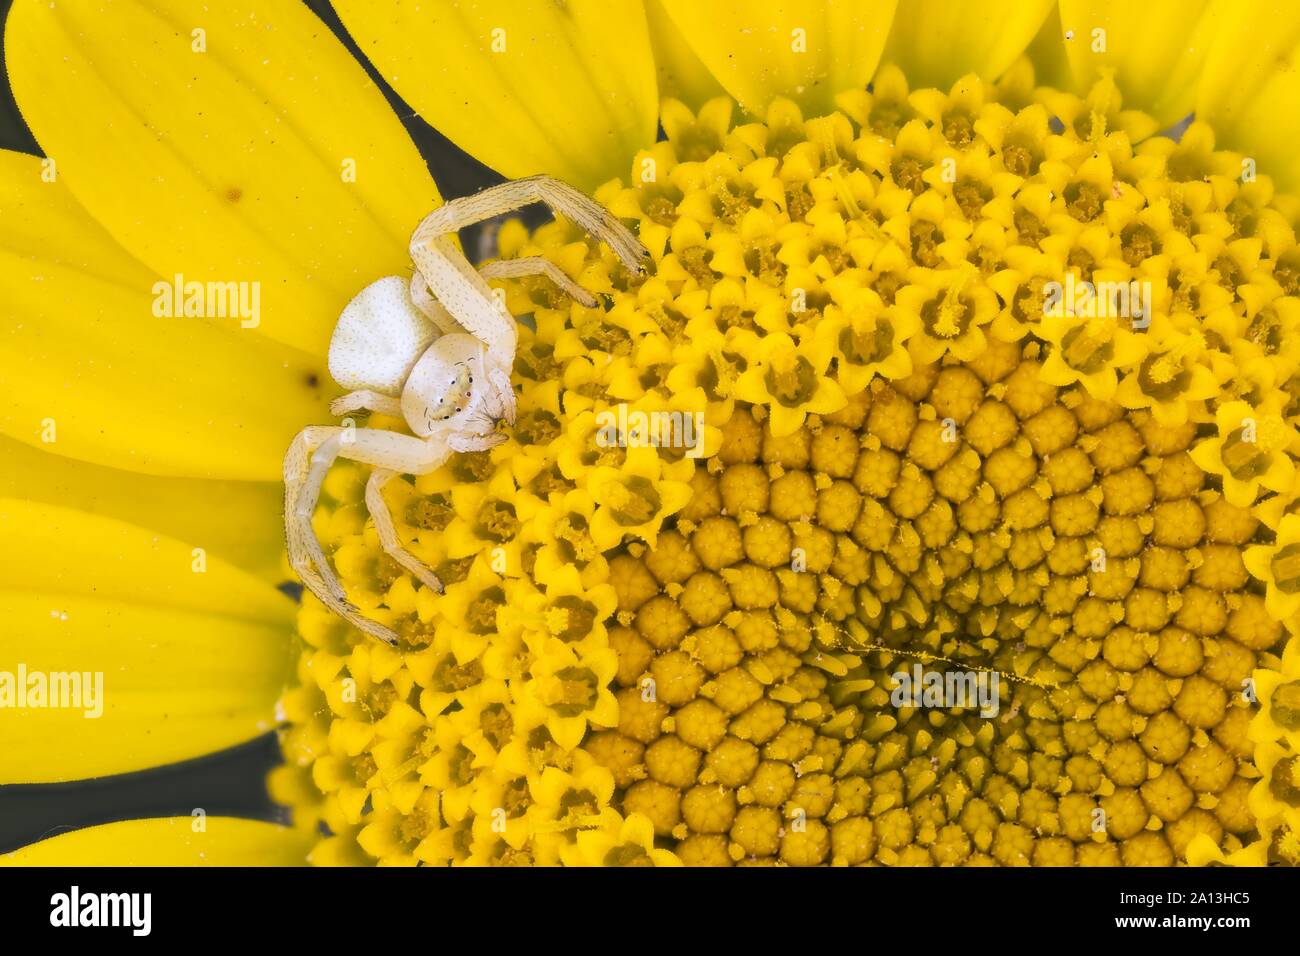 Houghton (Misumena vatia araignée crabe) sur fleur jaune d'golden marguerite (Anthemis tinctoria), Allemagne Banque D'Images